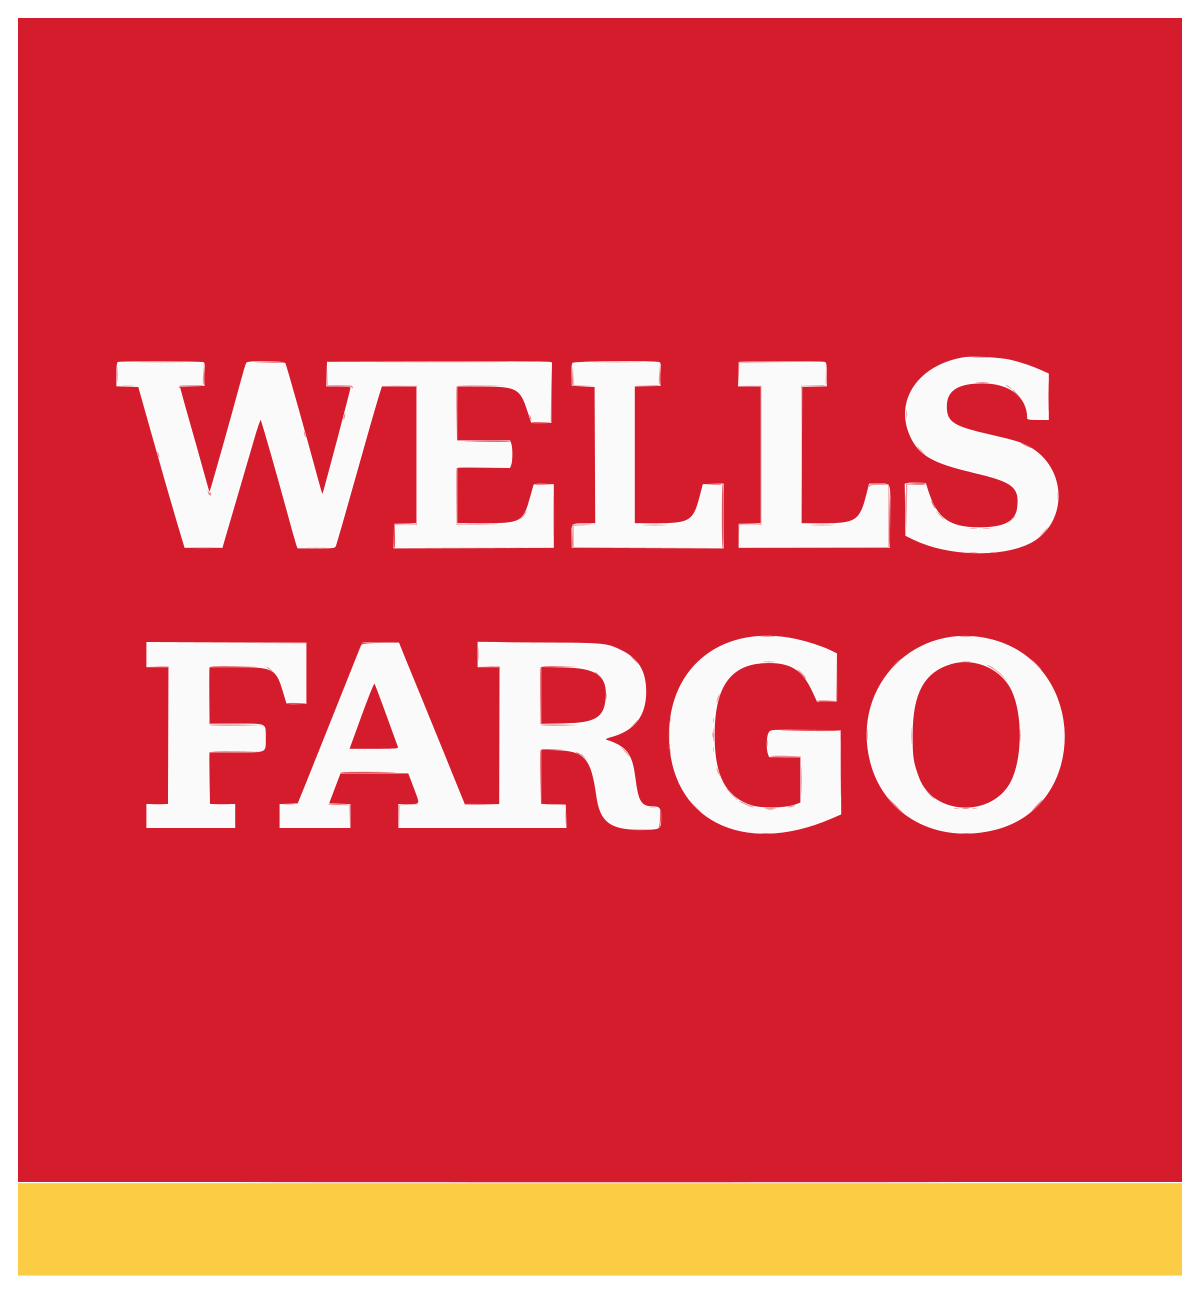 Wells Fargo New Saving account $525 Bonus with 25K deposit